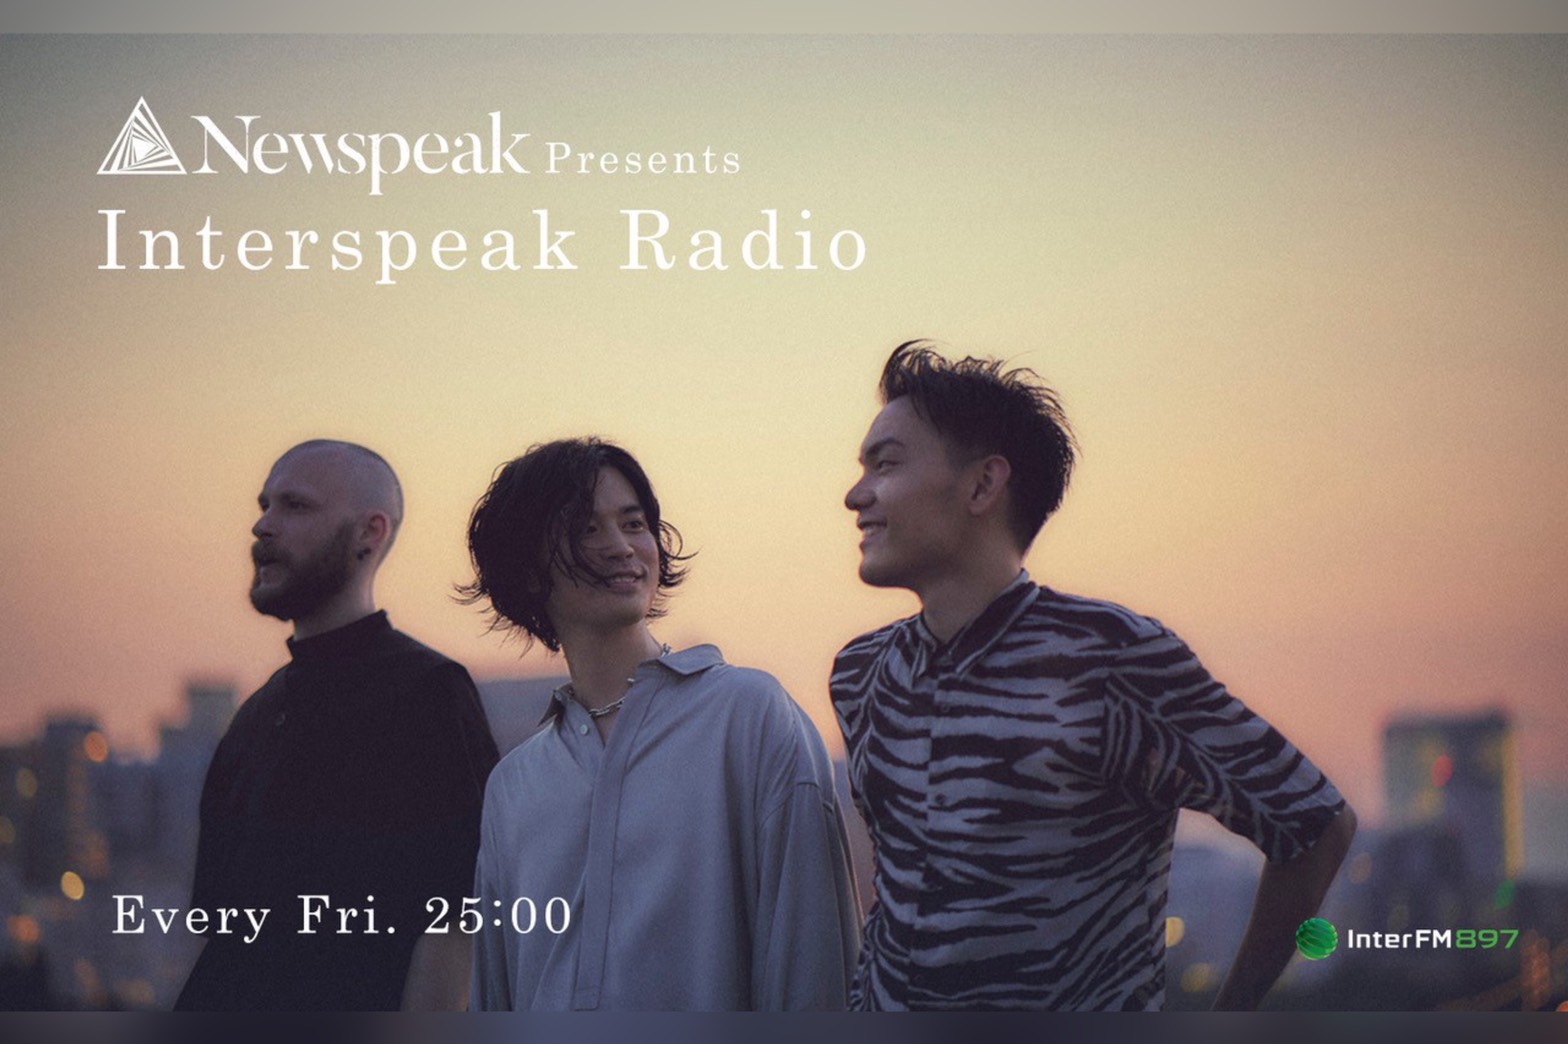 InterFM897 レギュラー番組「Newspeak presents “Interspeak Radio”」放送決定！